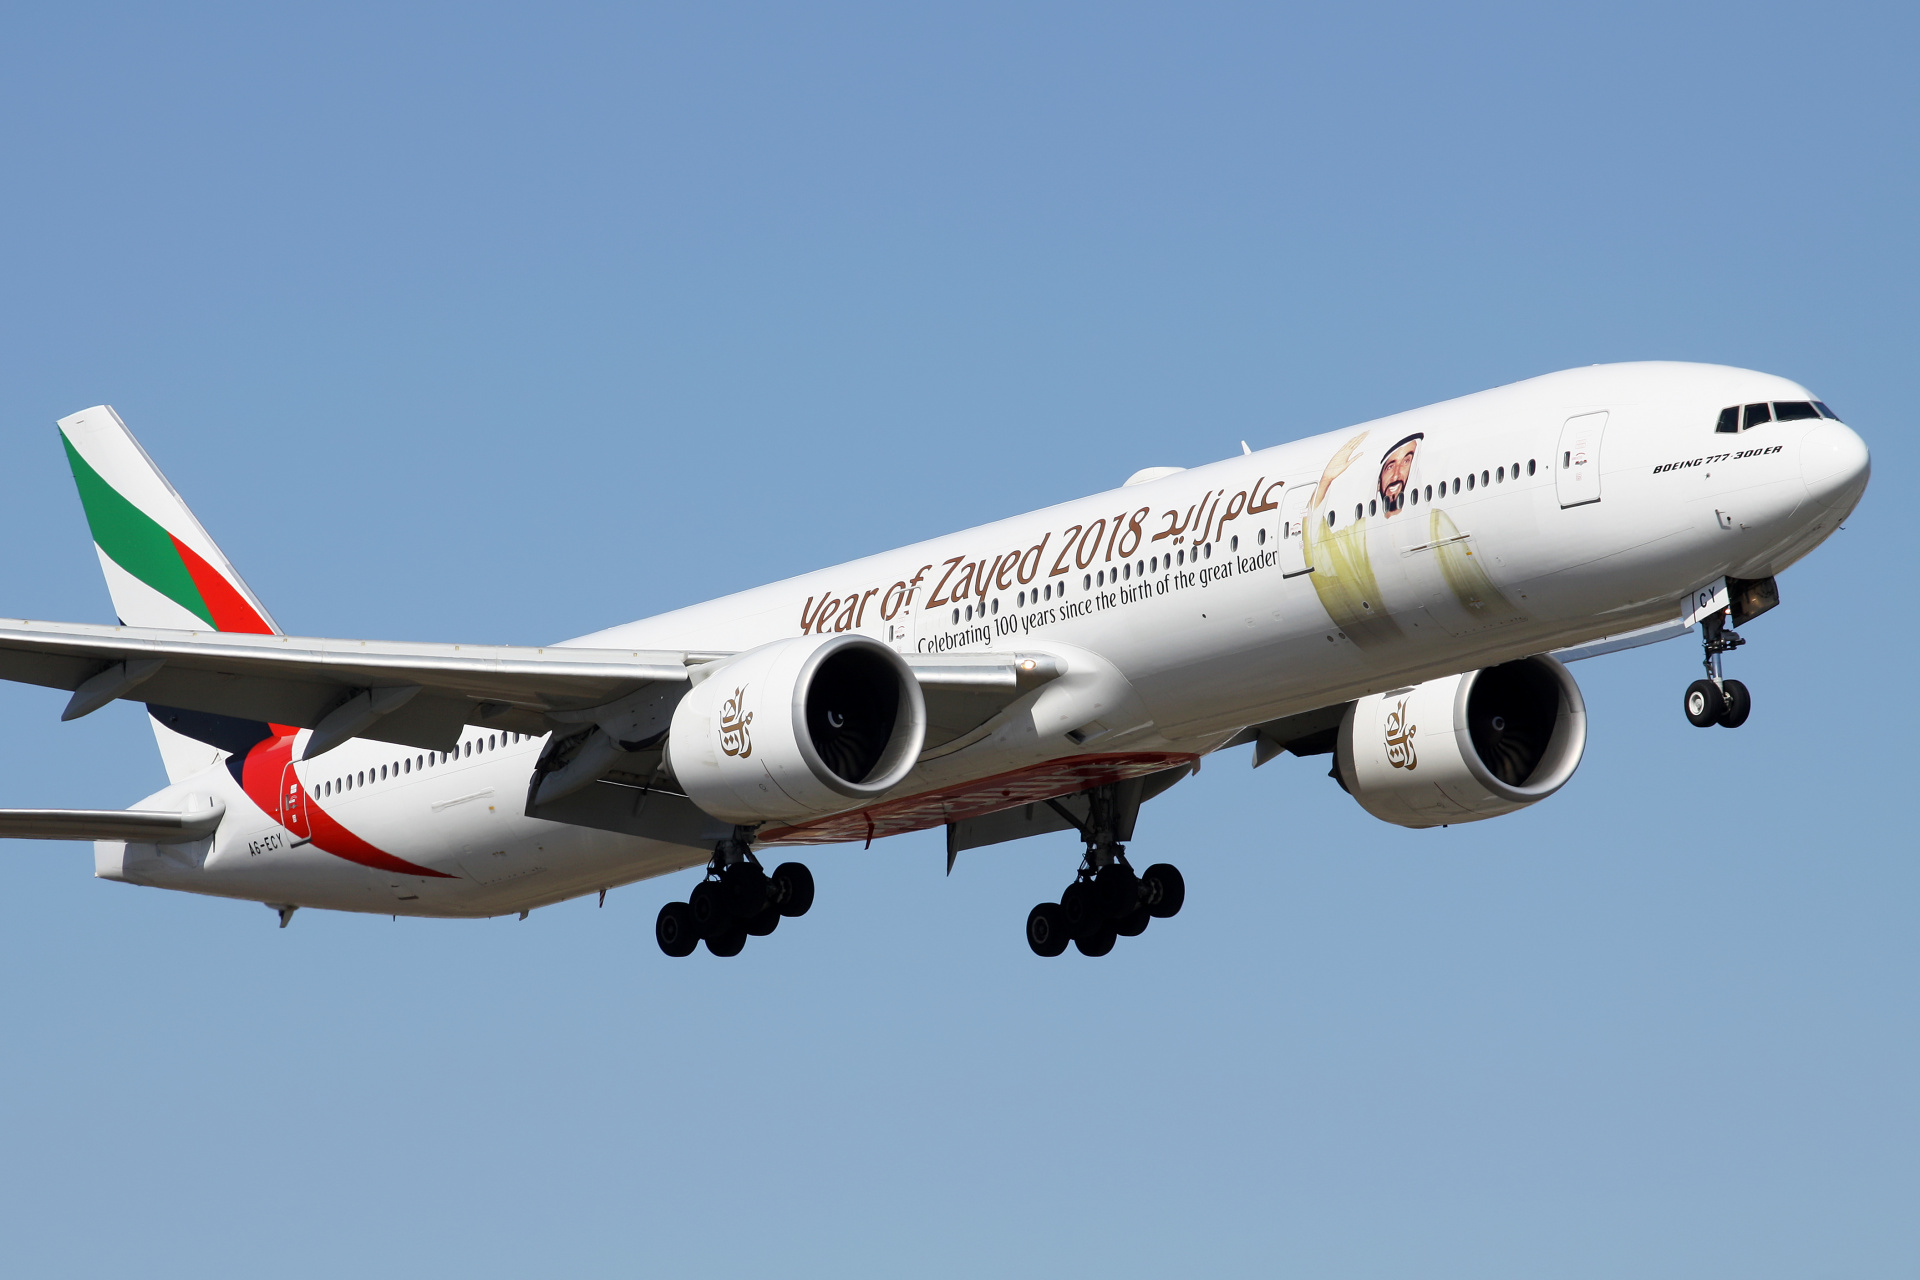 A6-ECY (malowanie Year of Zayed 2018) (Samoloty » Spotting na EPWA » Boeing 777-300ER » Emirates)